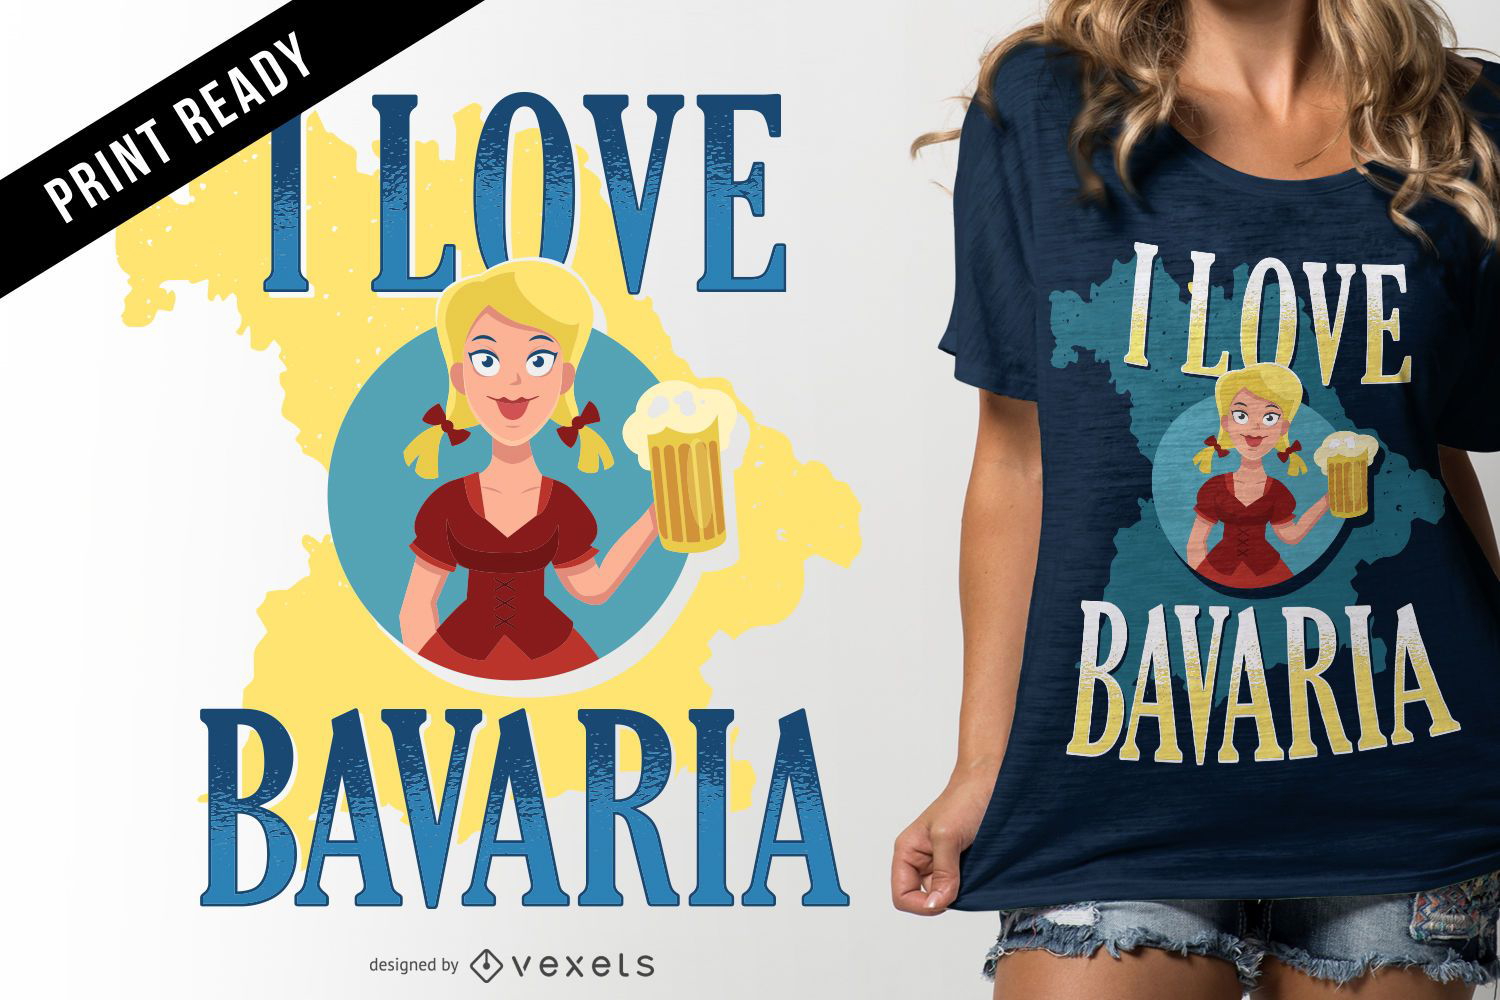 I love Bavaria t-shirt design